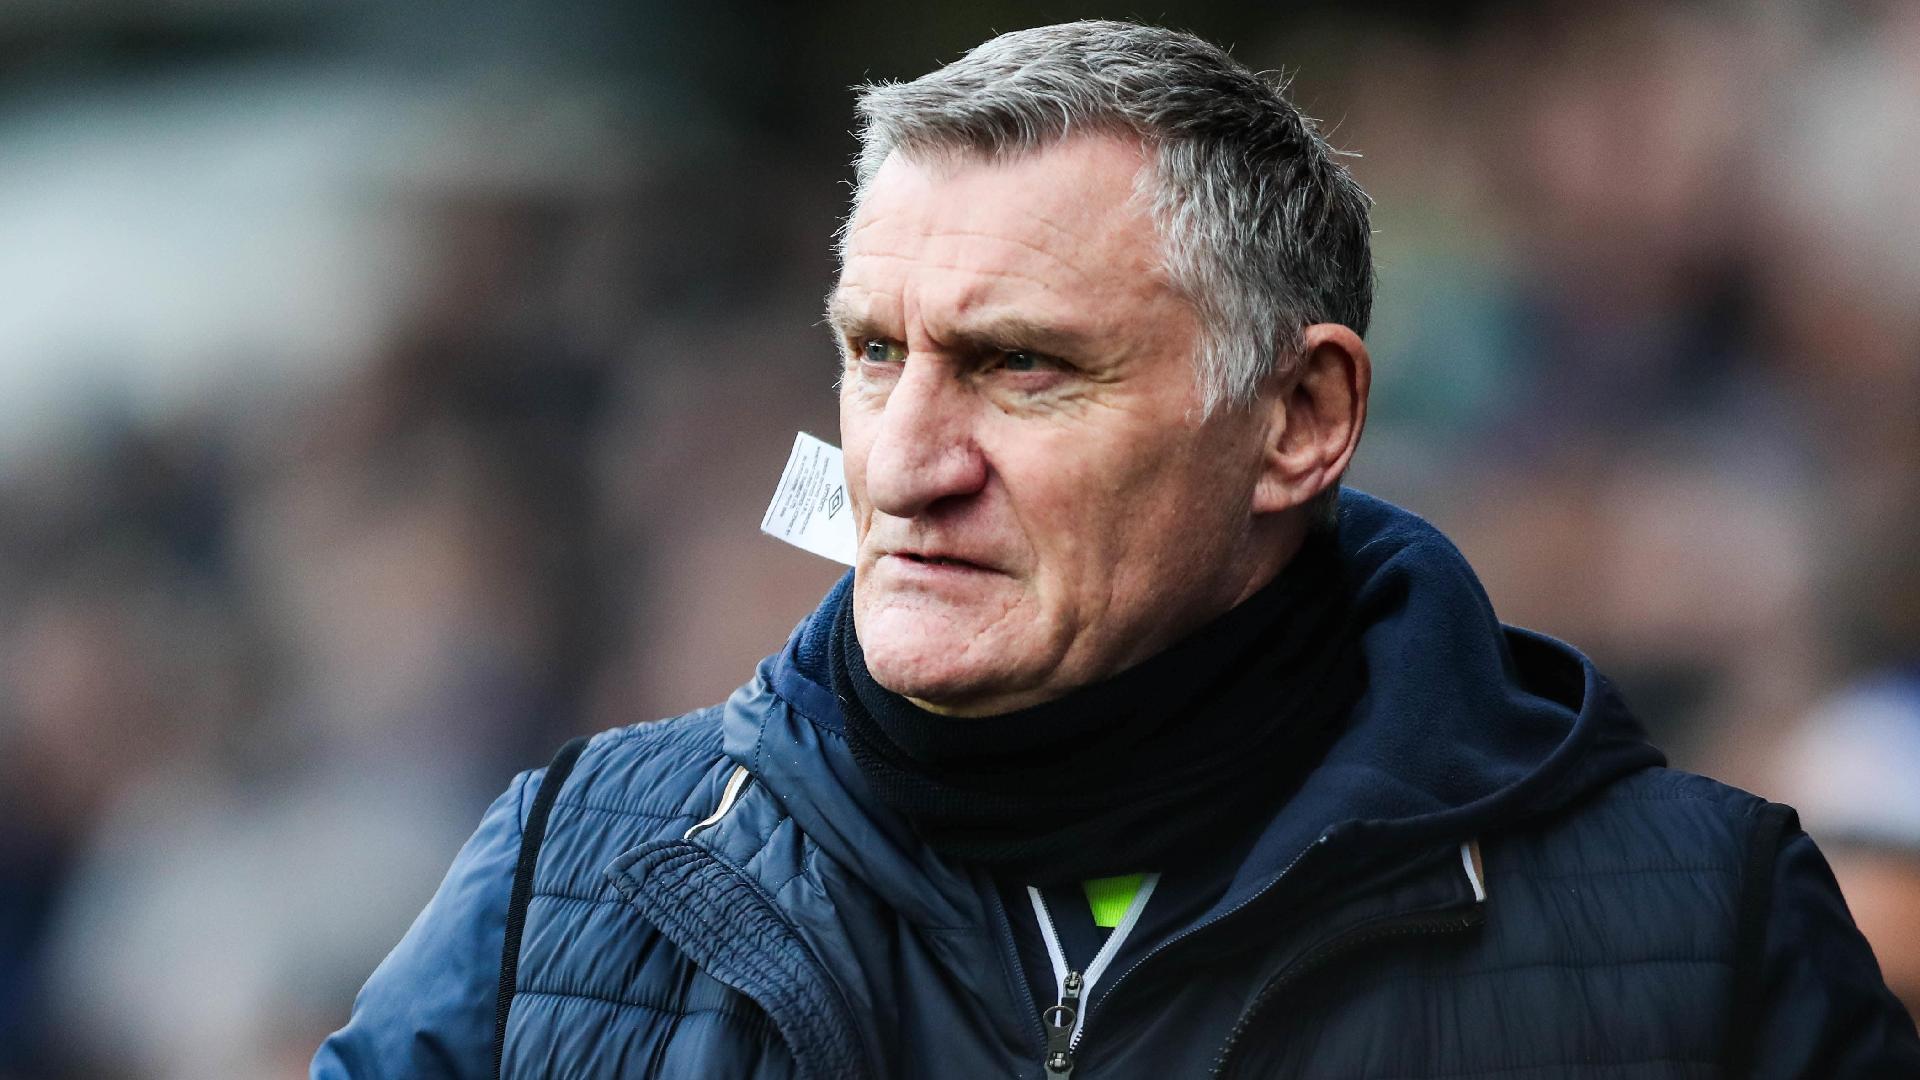 Sunderland make ‘difficult decision’ to sack head coach Tony Mowbray